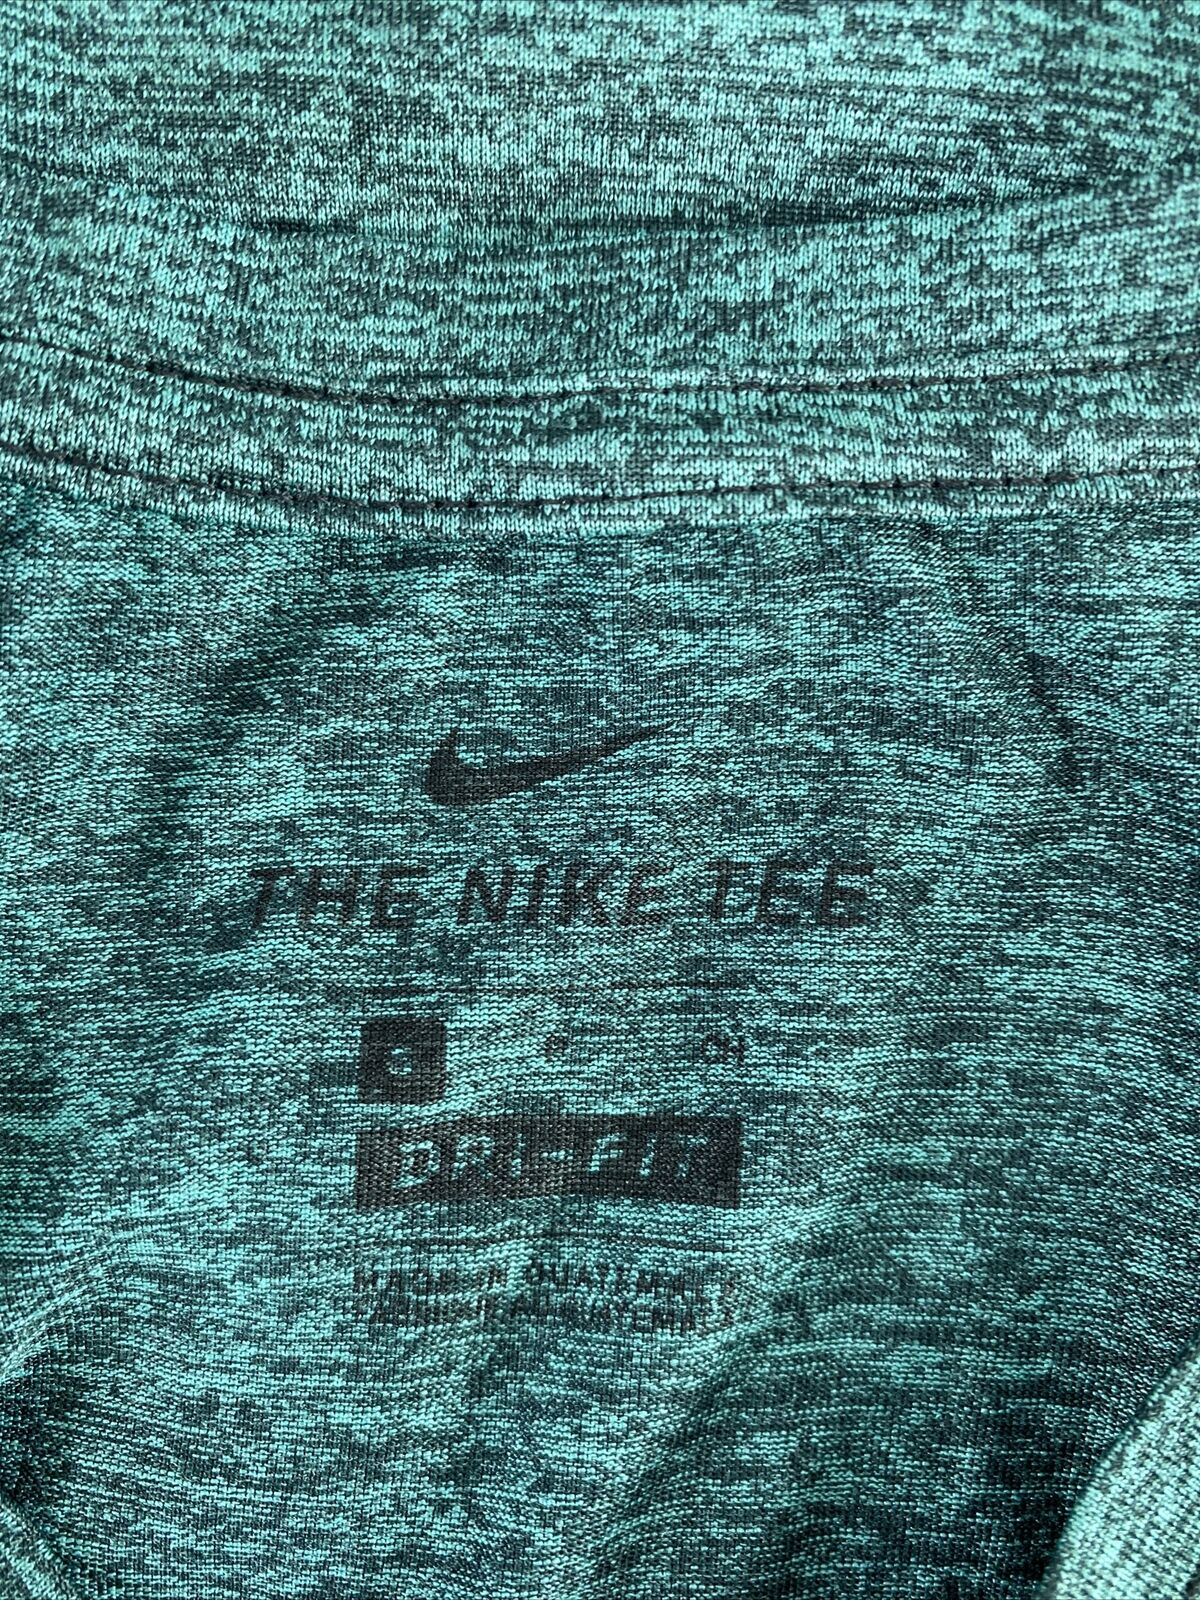 Nike Men's Green Dri-Fit Short Sleeve Athletic Short Sleeve T-Shirt - S